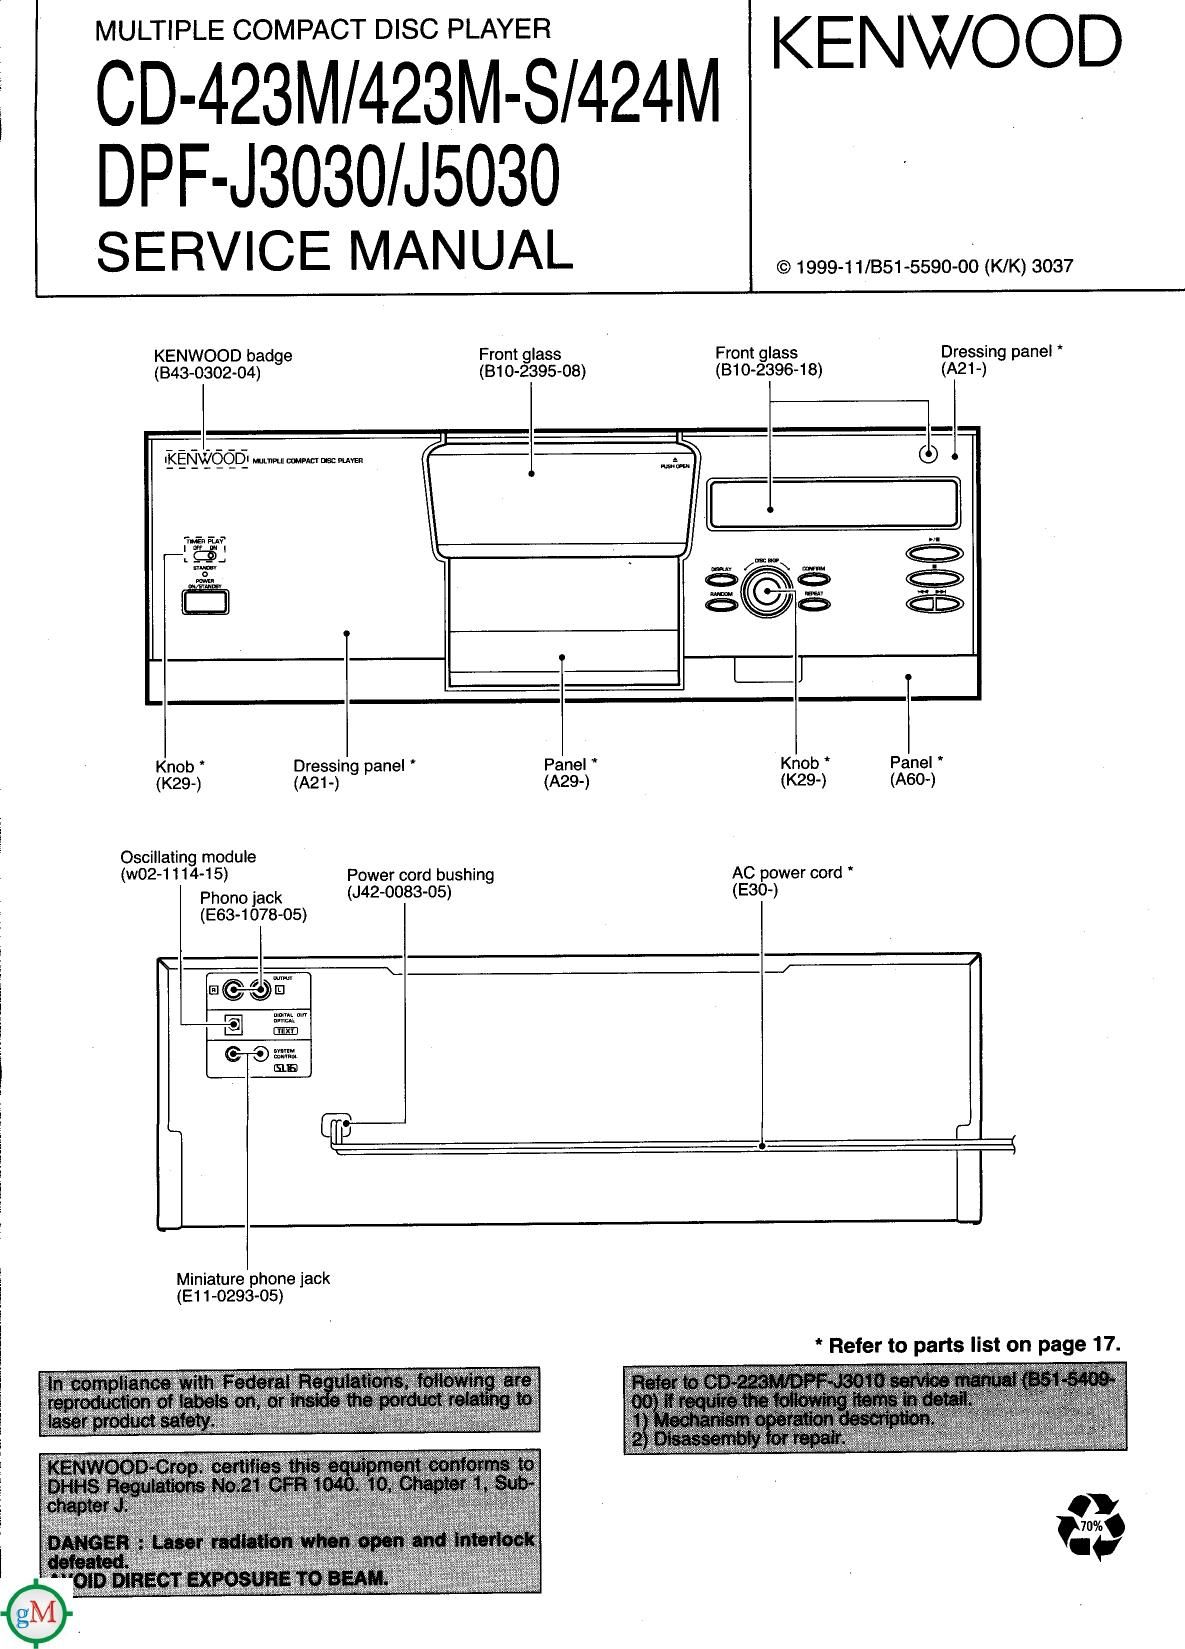 Kenwood DPFJ 5030 Service Manual